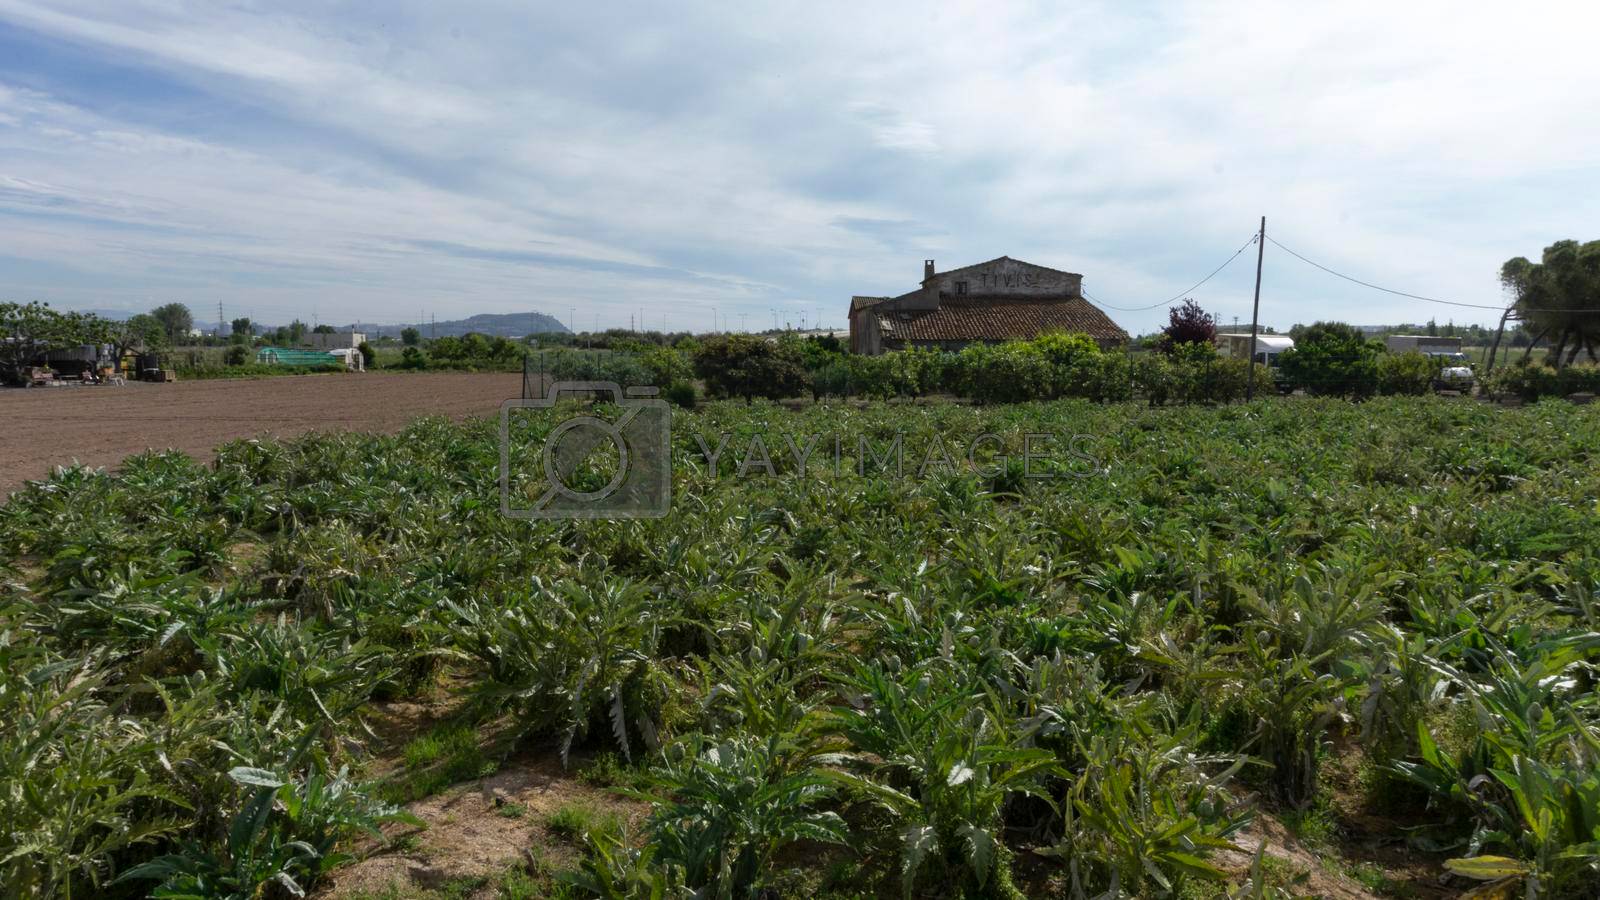 Artichoke plantation on a farm on the outskirts of barcelona in spain